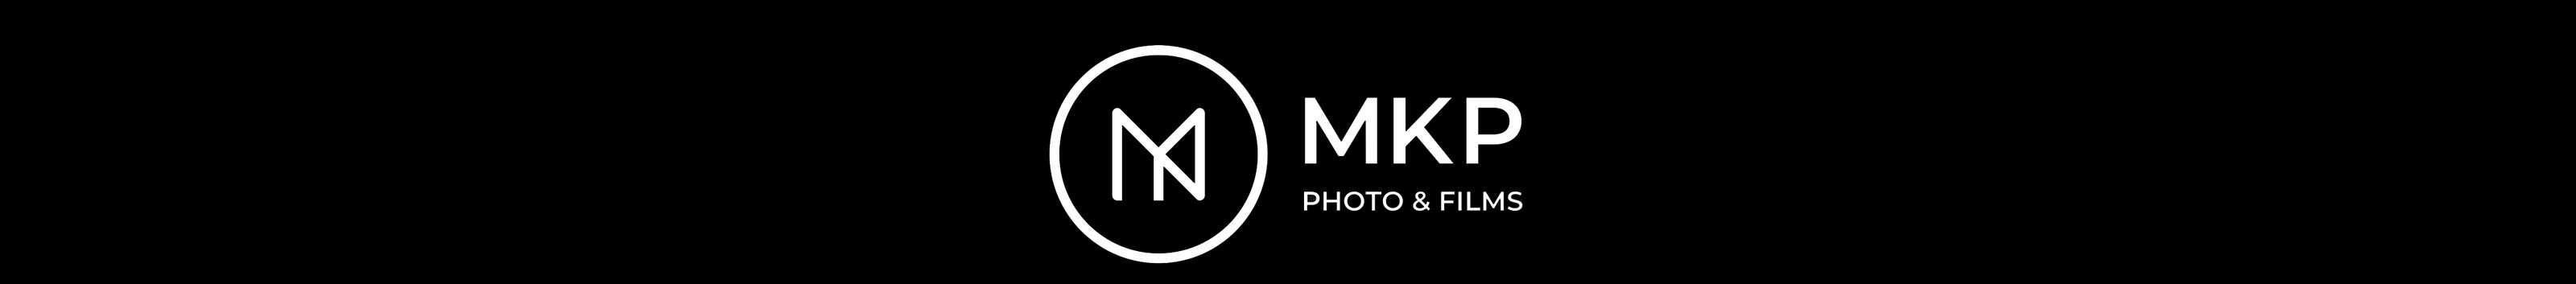 MKP Photo & Films のプロファイルバナー